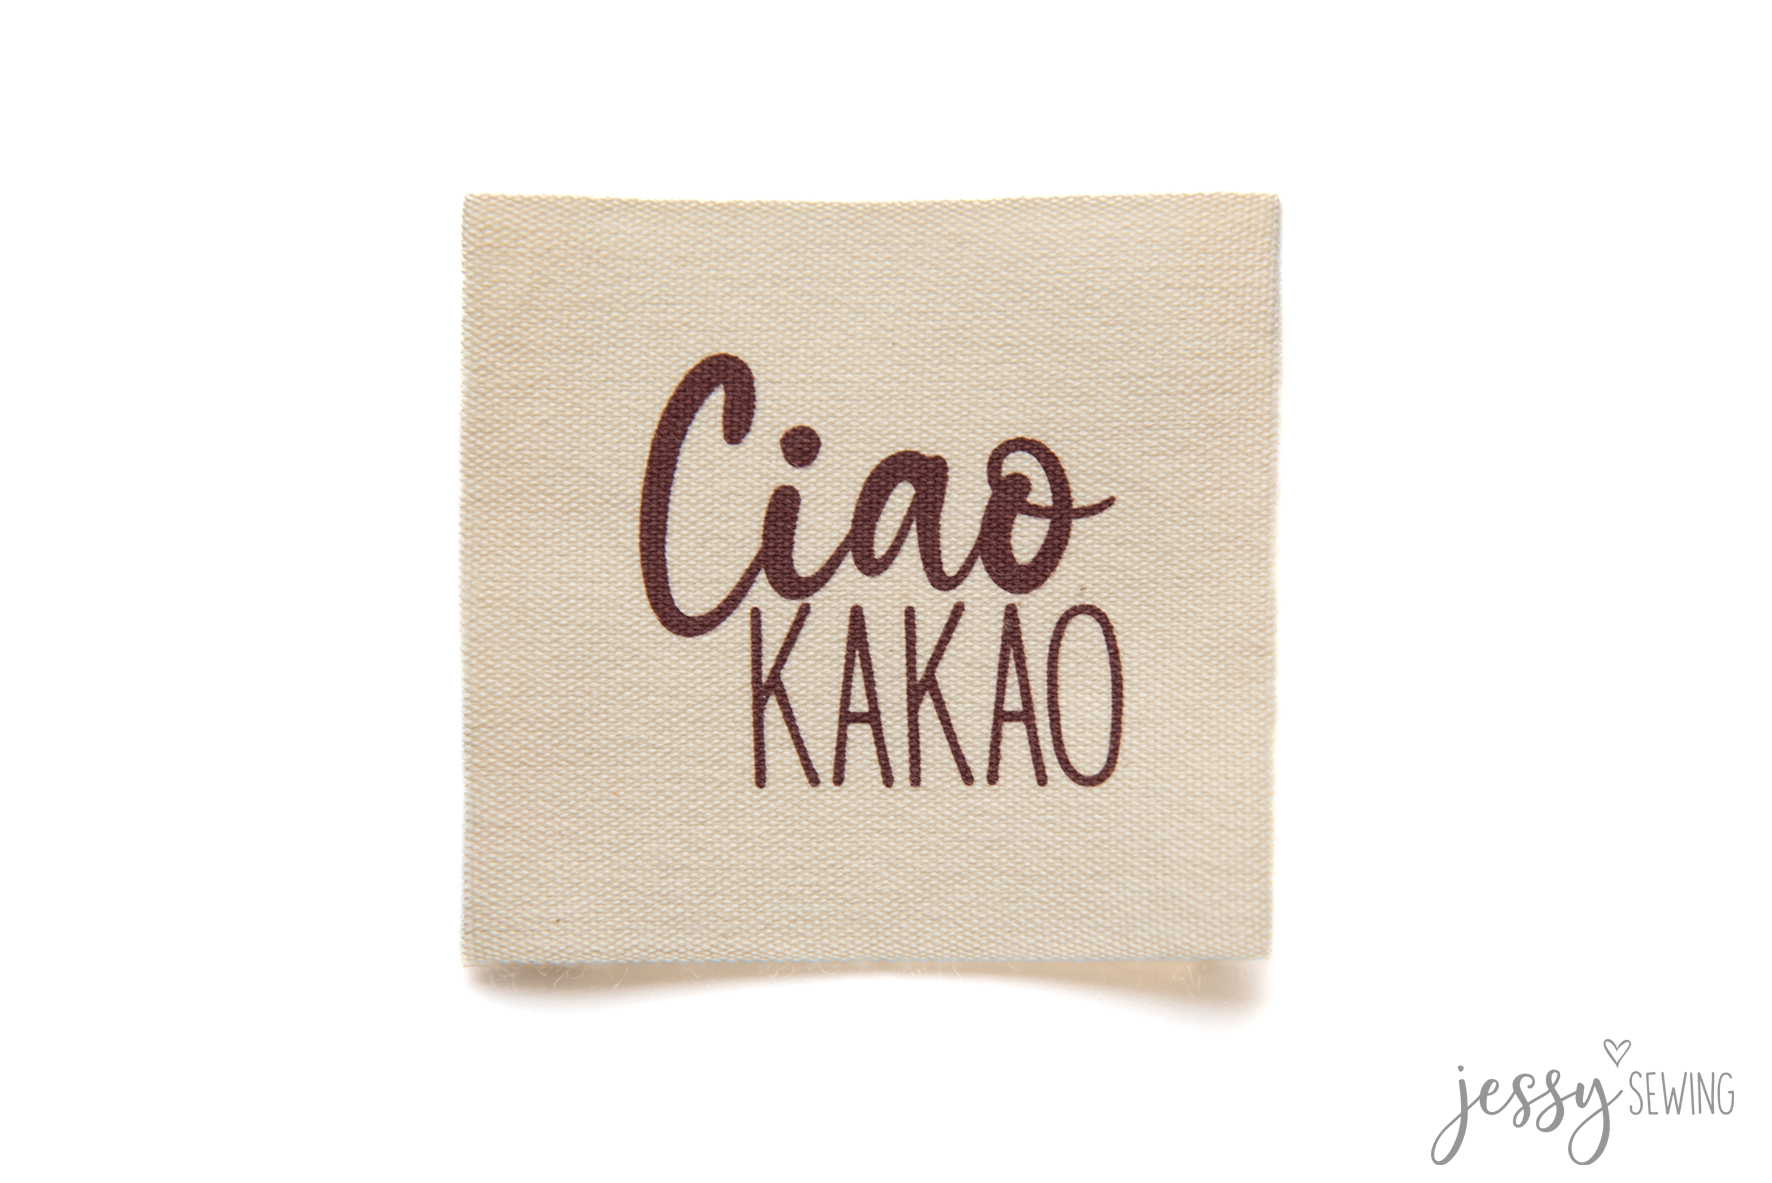 #263 Baumwolllabel "Ciao Kakao"